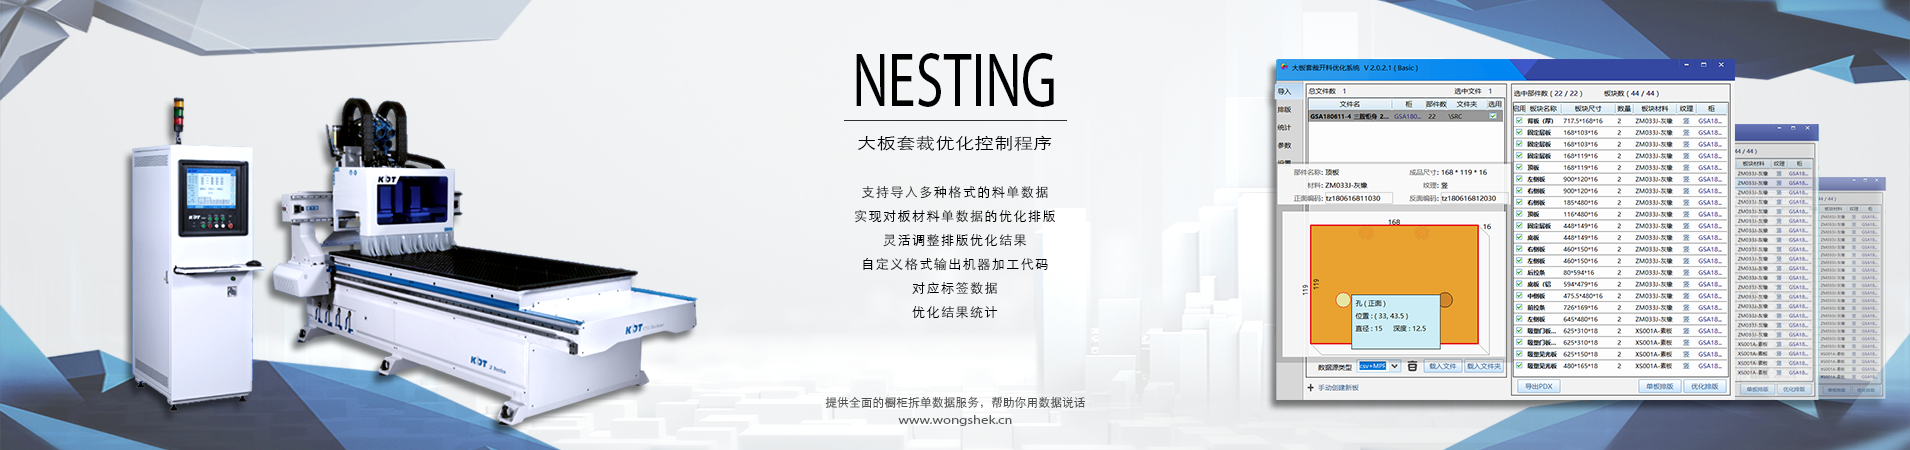 Nesting软件